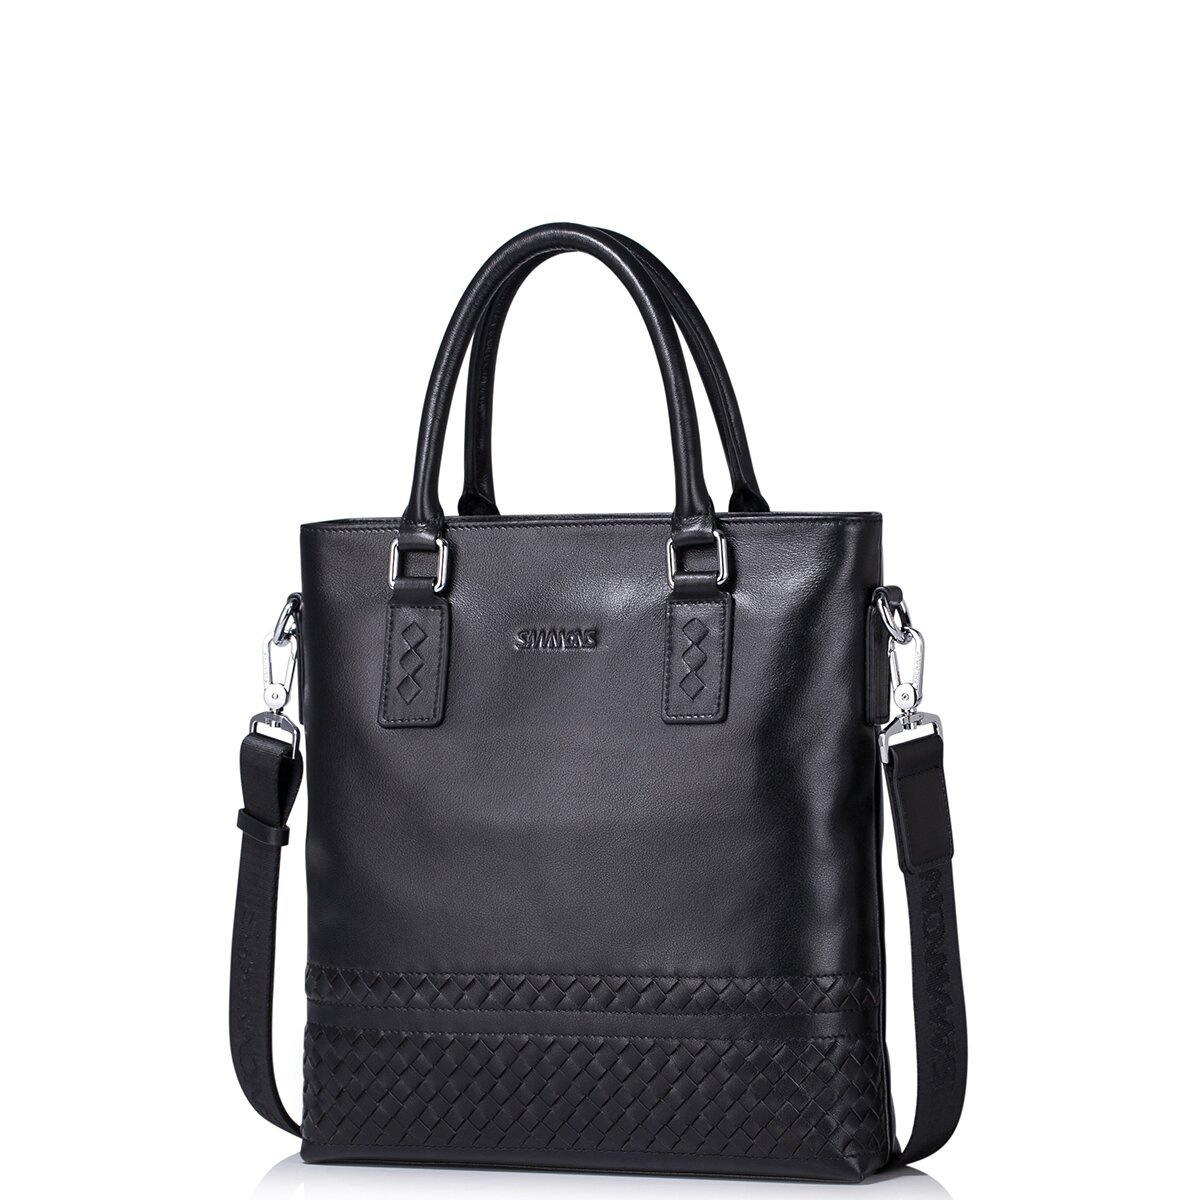 SMMONS man leather leisure business handbags Black